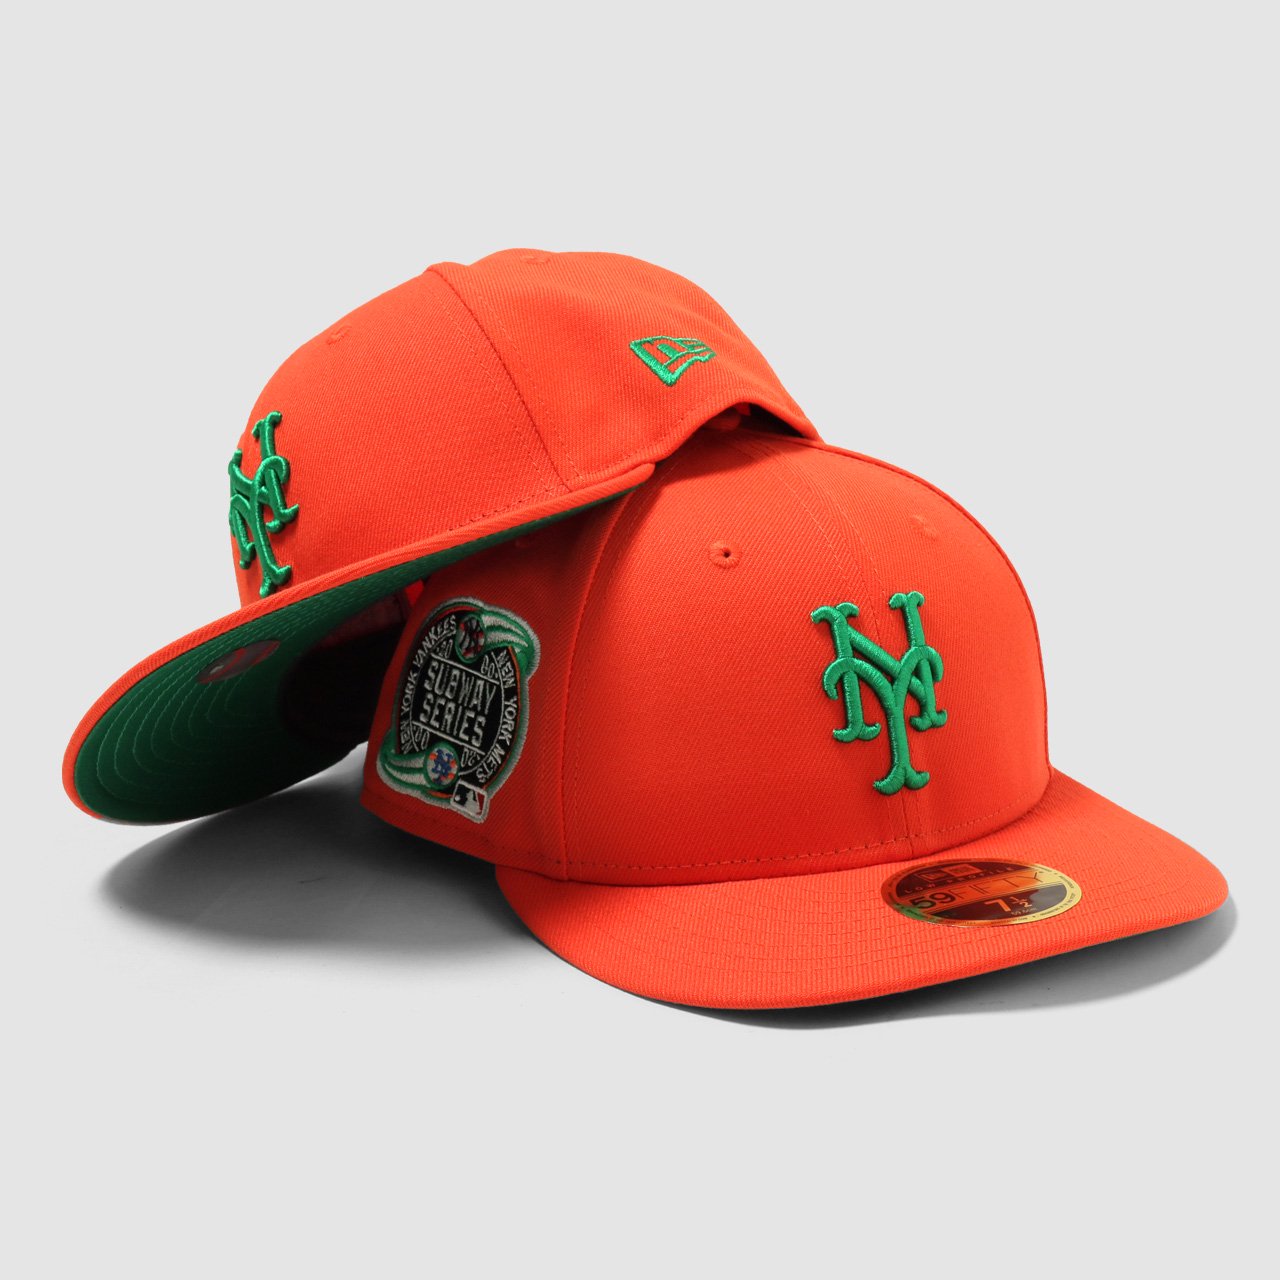 New York Mets Subway Series New Era Low Profile 59Fifty Cap Orange